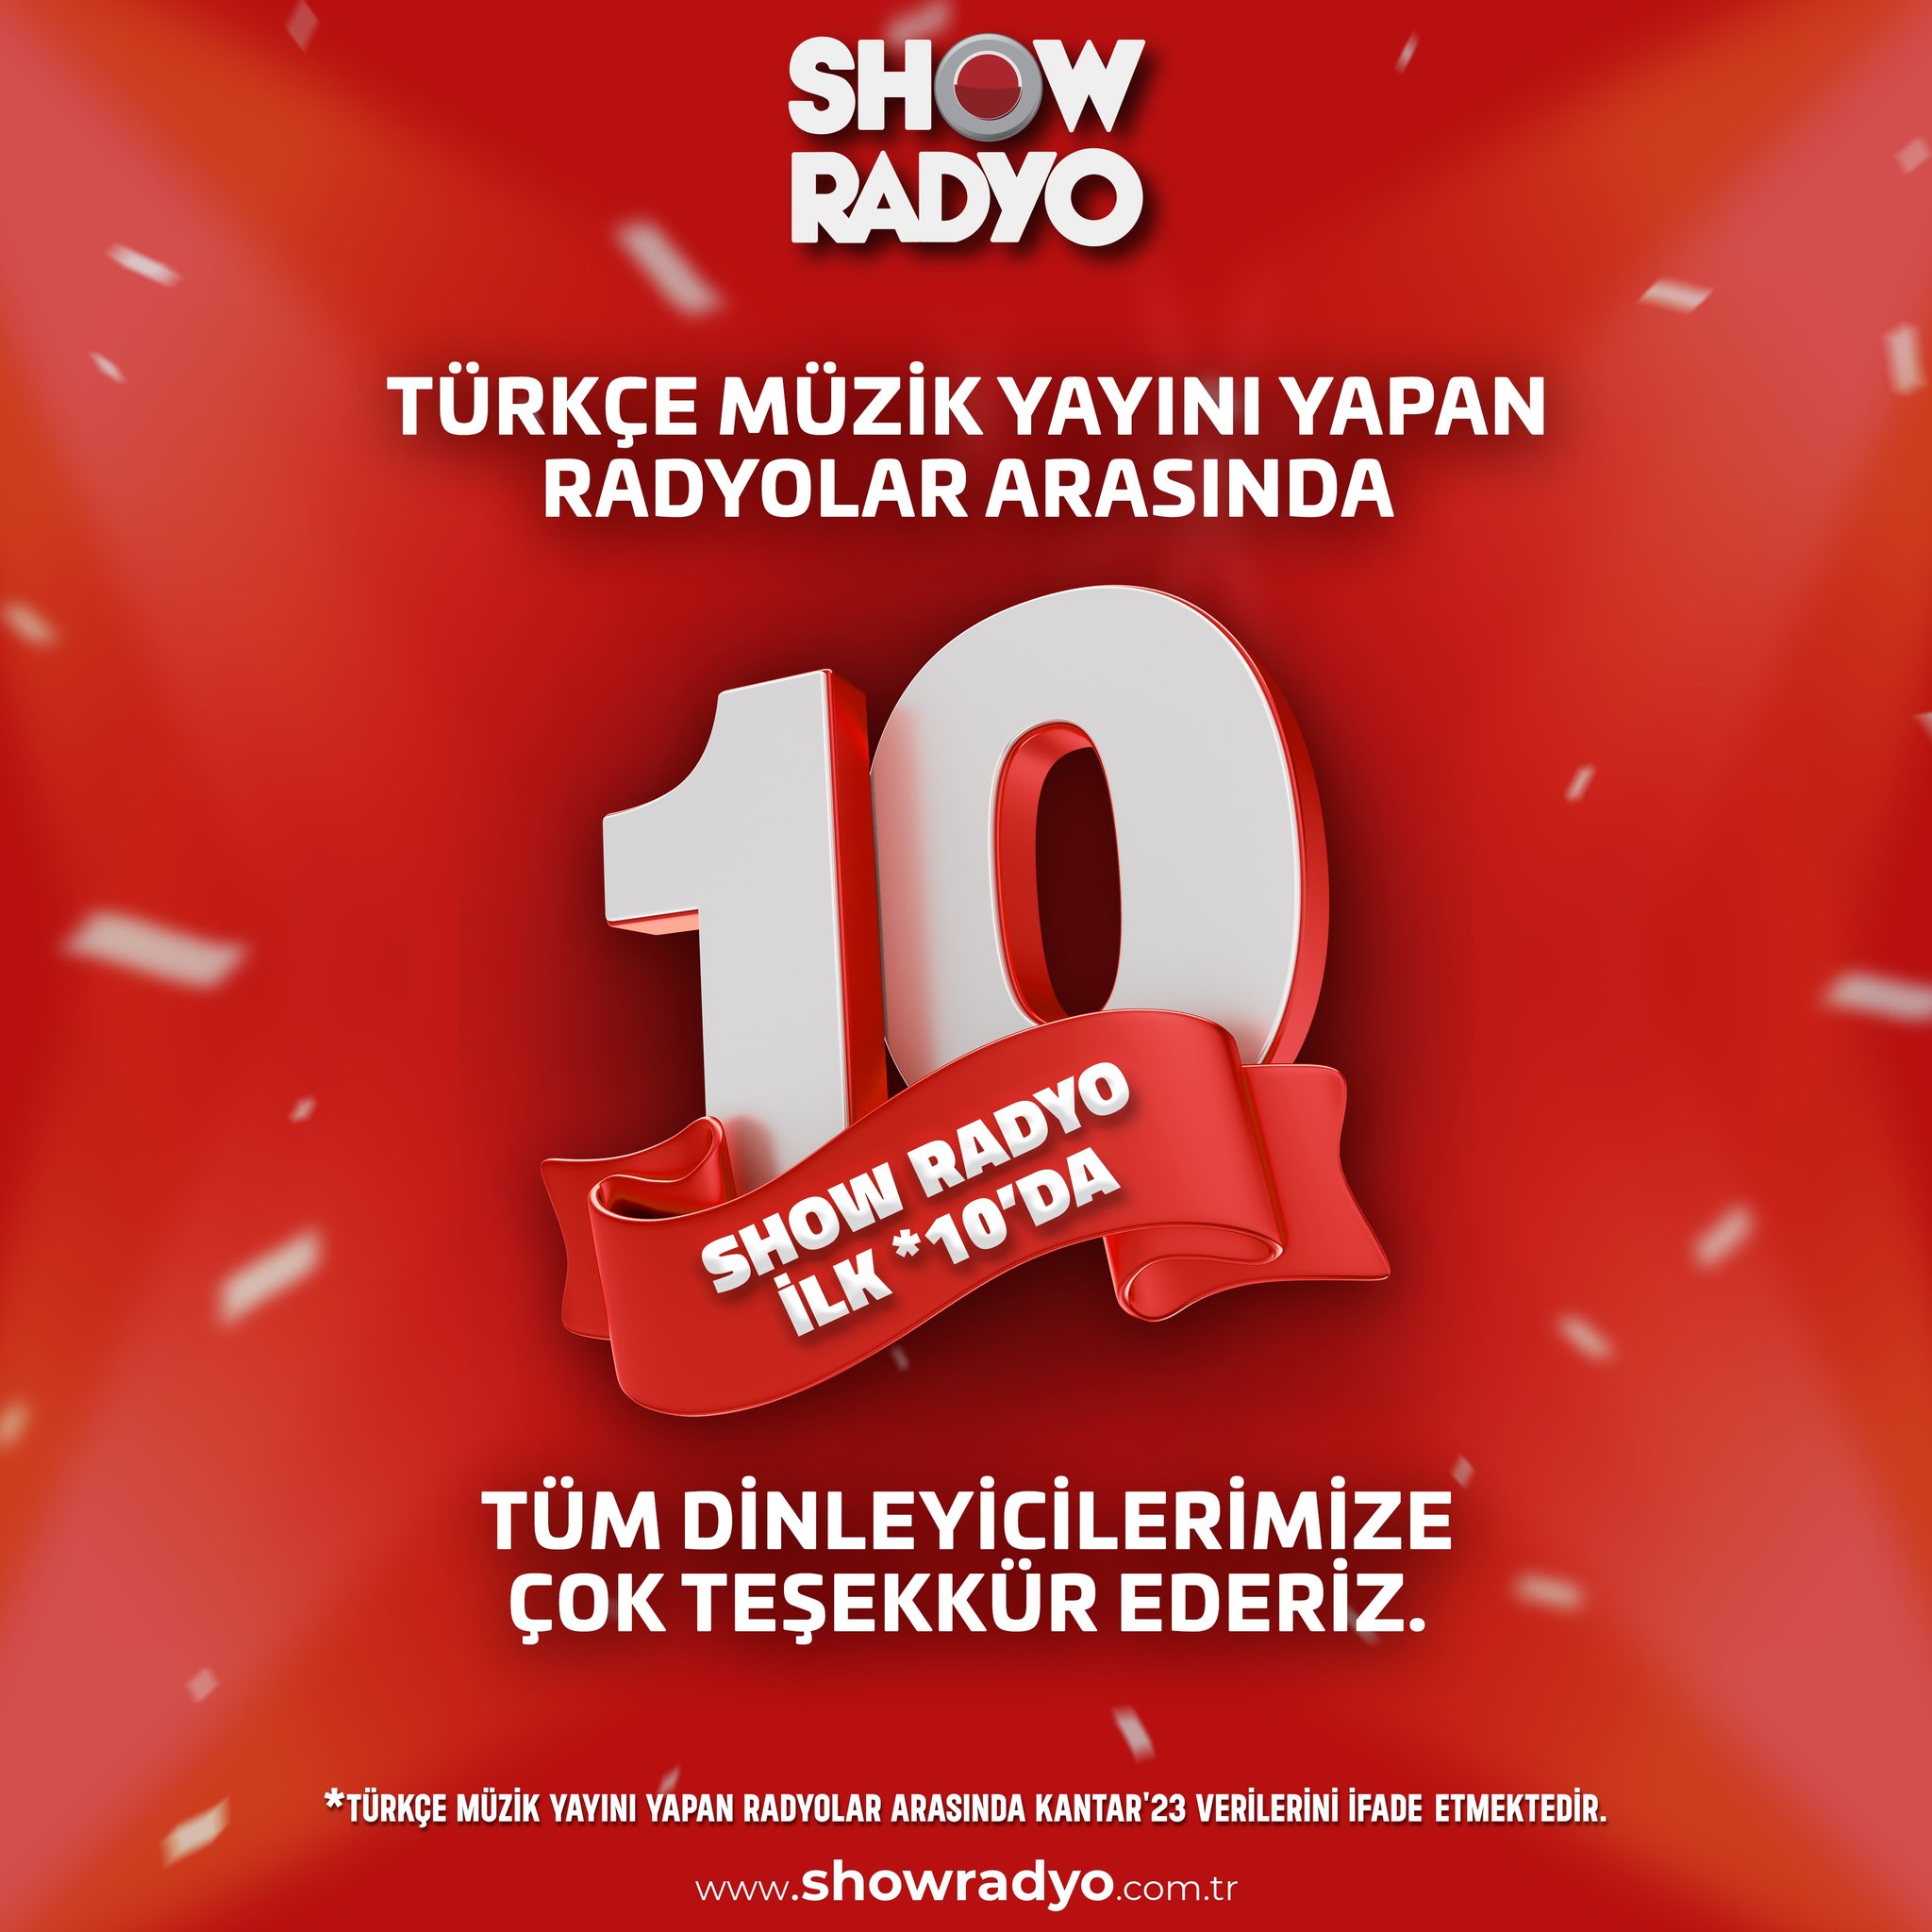 Show Radyo on X: "Show Radyo'ya olan ilginize teşekkür ederiz! Türkçe Müzik  yayını yapan radyolar arasında Show Radyo İLK 10'DA! #ShowRadyo  https://t.co/JAoGdwgAjg" / X